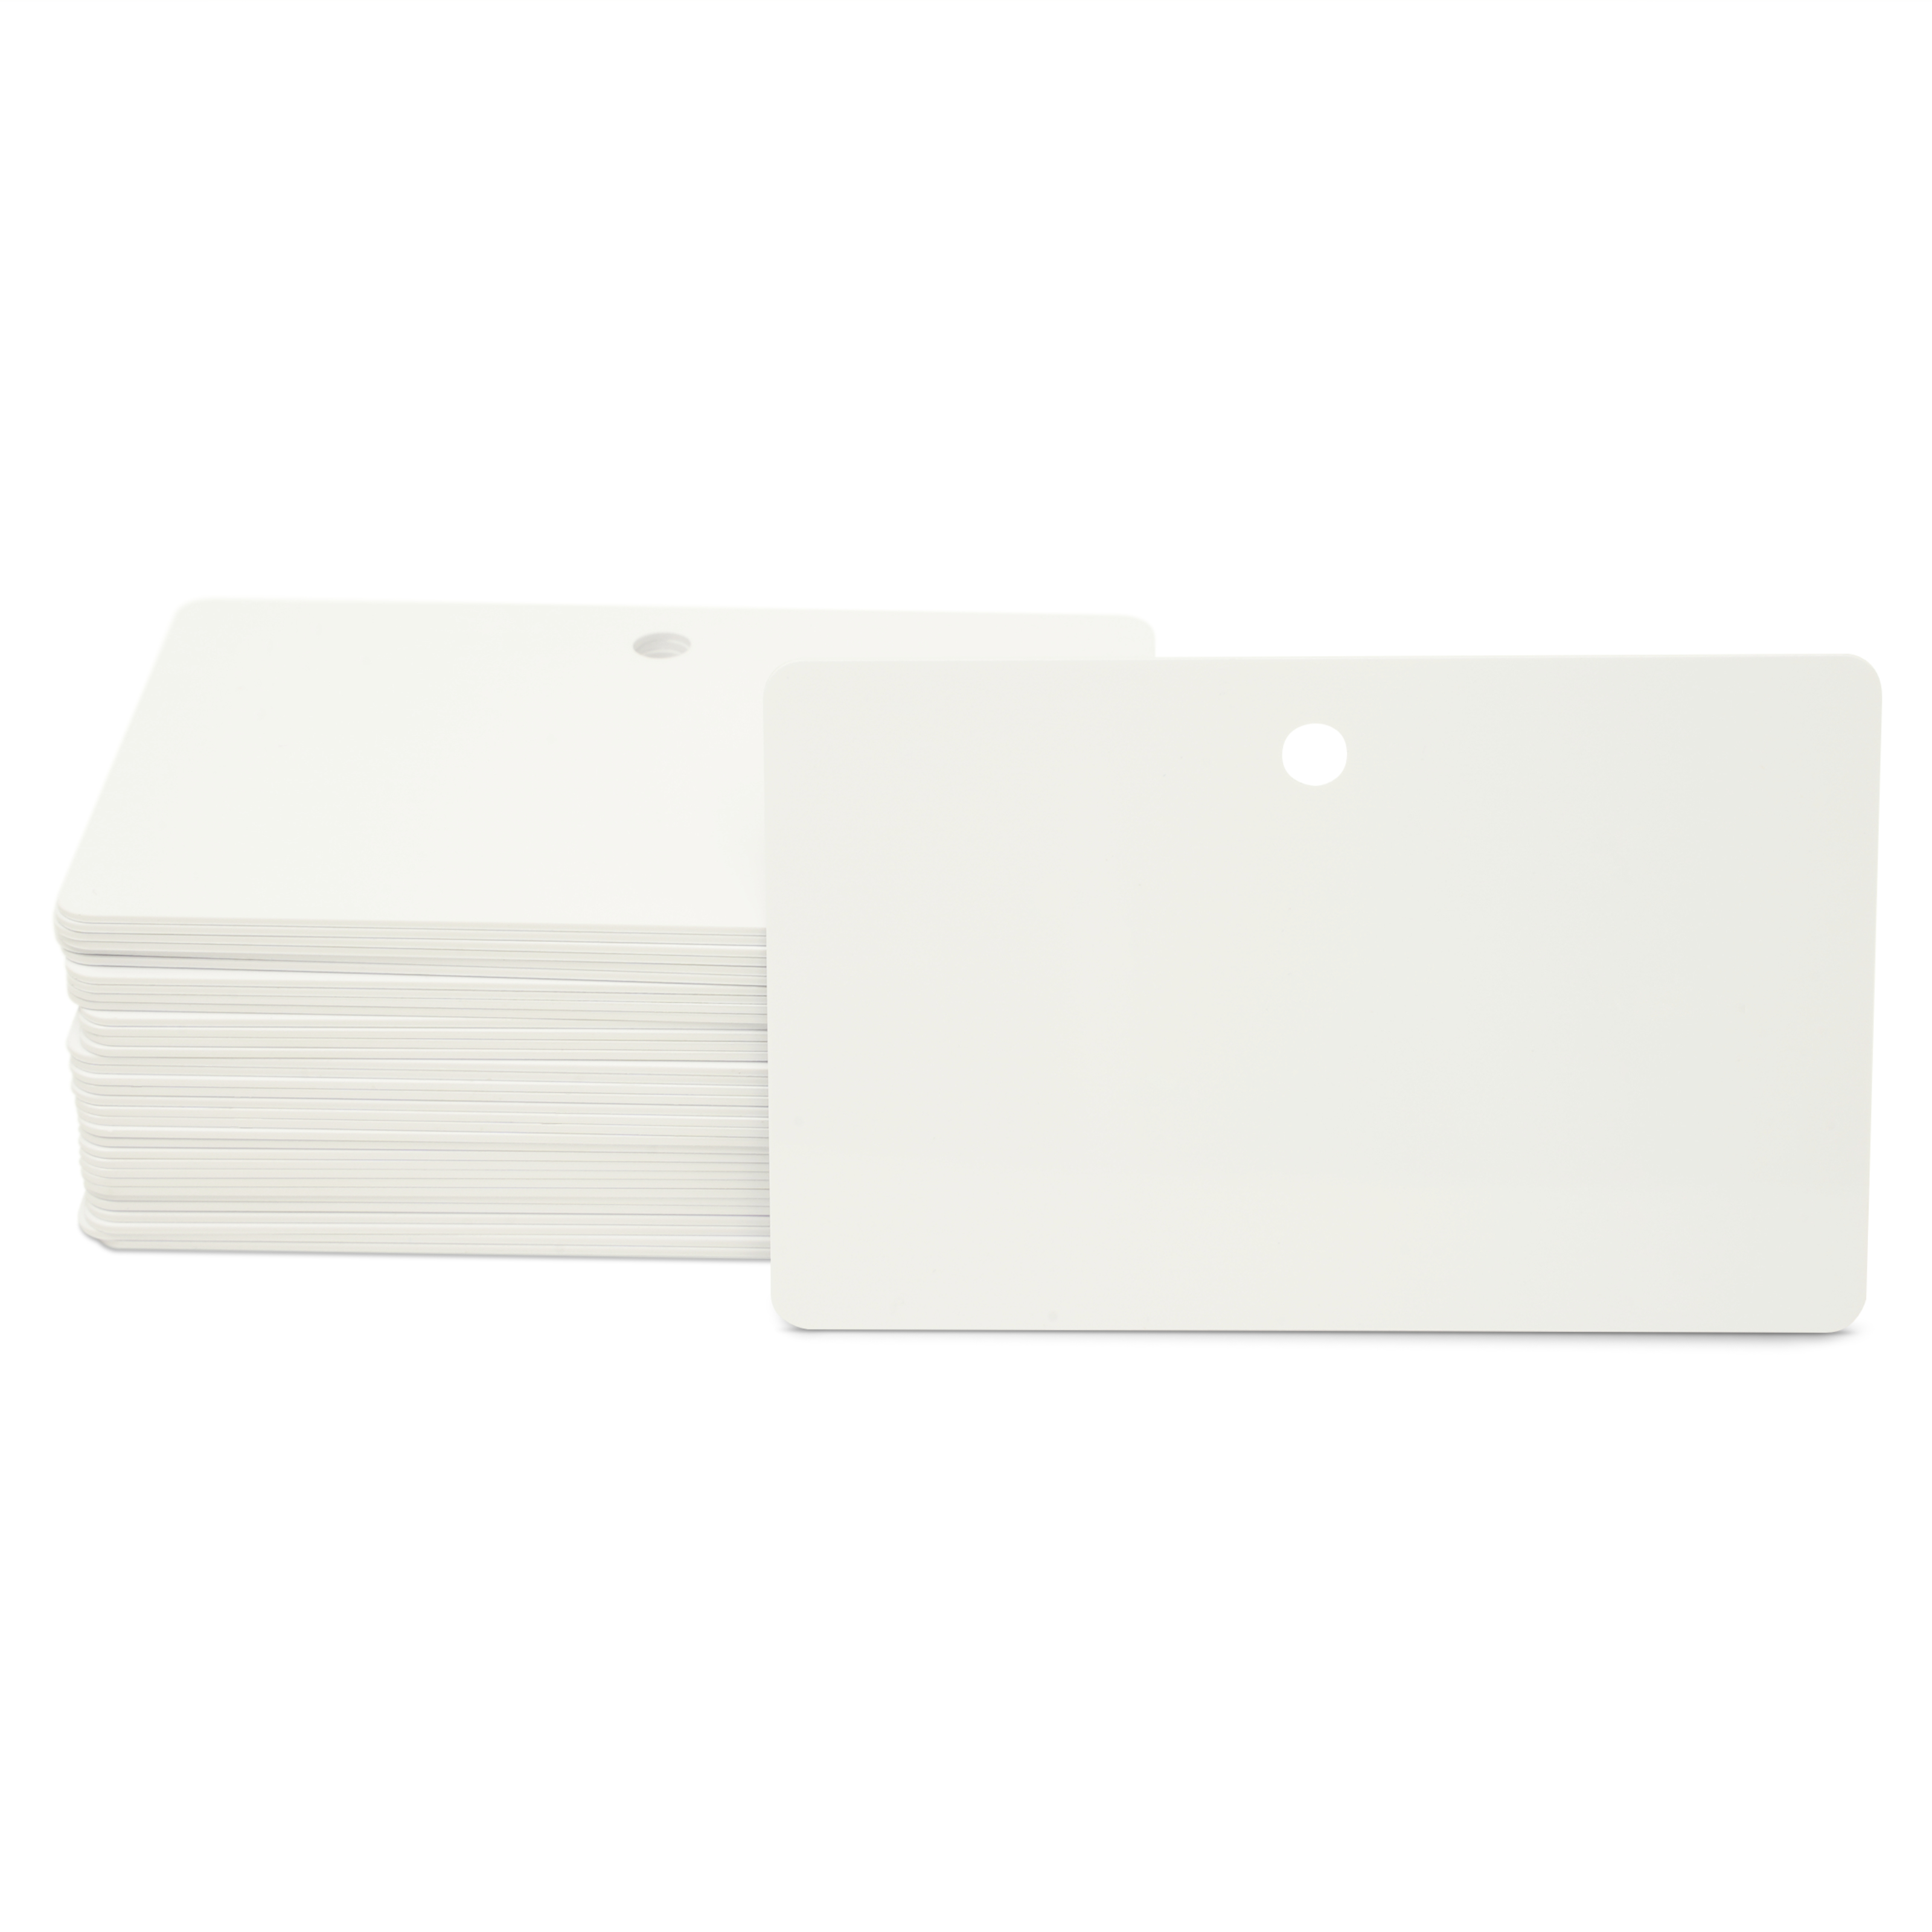 NFC Karte PVC - 85,6 x 54 mm - NTAG216 - 924 Byte - weiß - Querformat gelocht